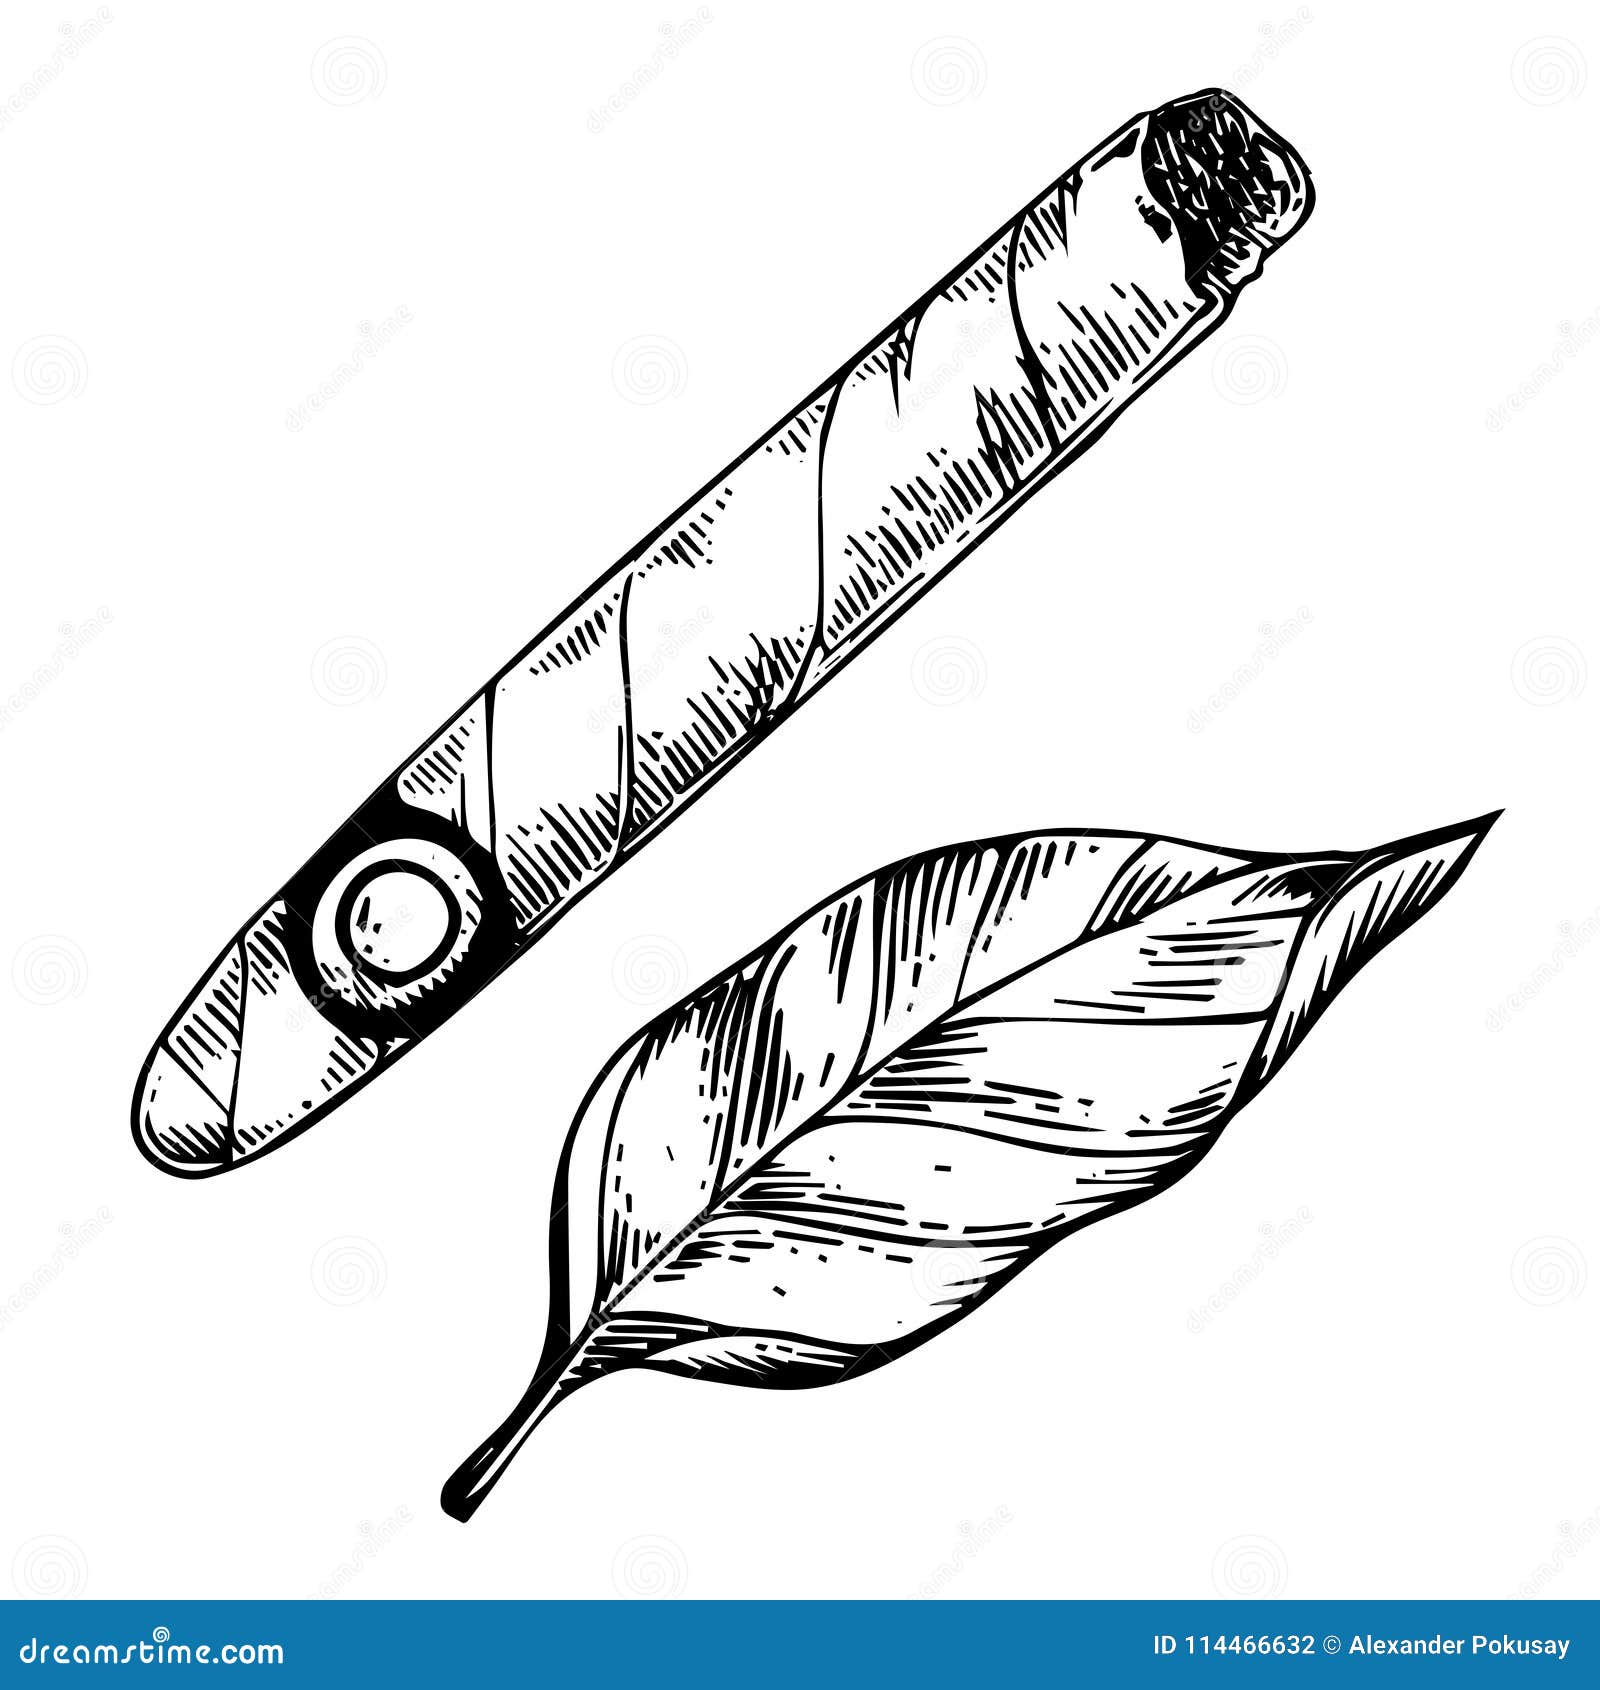 Black Ink Grunge Hand Drawing of Smoking Cigar  Stock Illustration  45967354  PIXTA